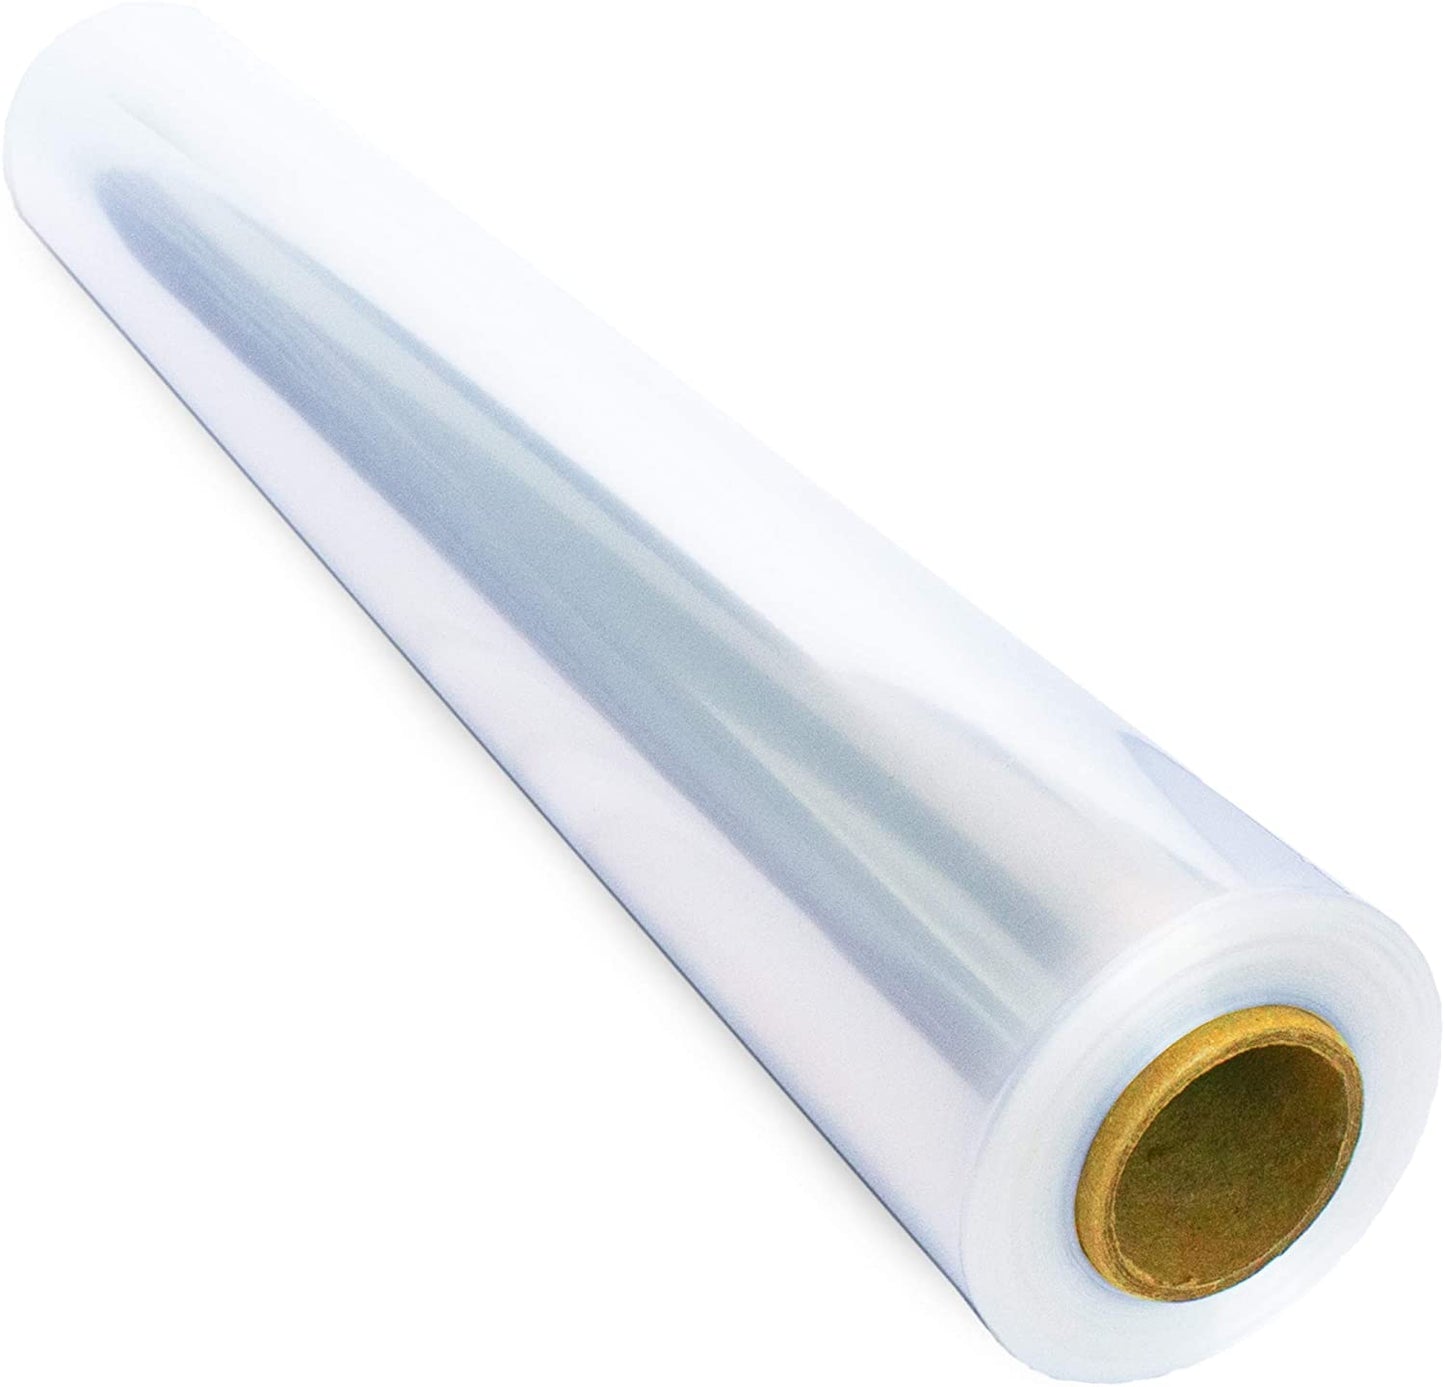 Clear Cellophane Wrap 50mm x 200m Premium Quality